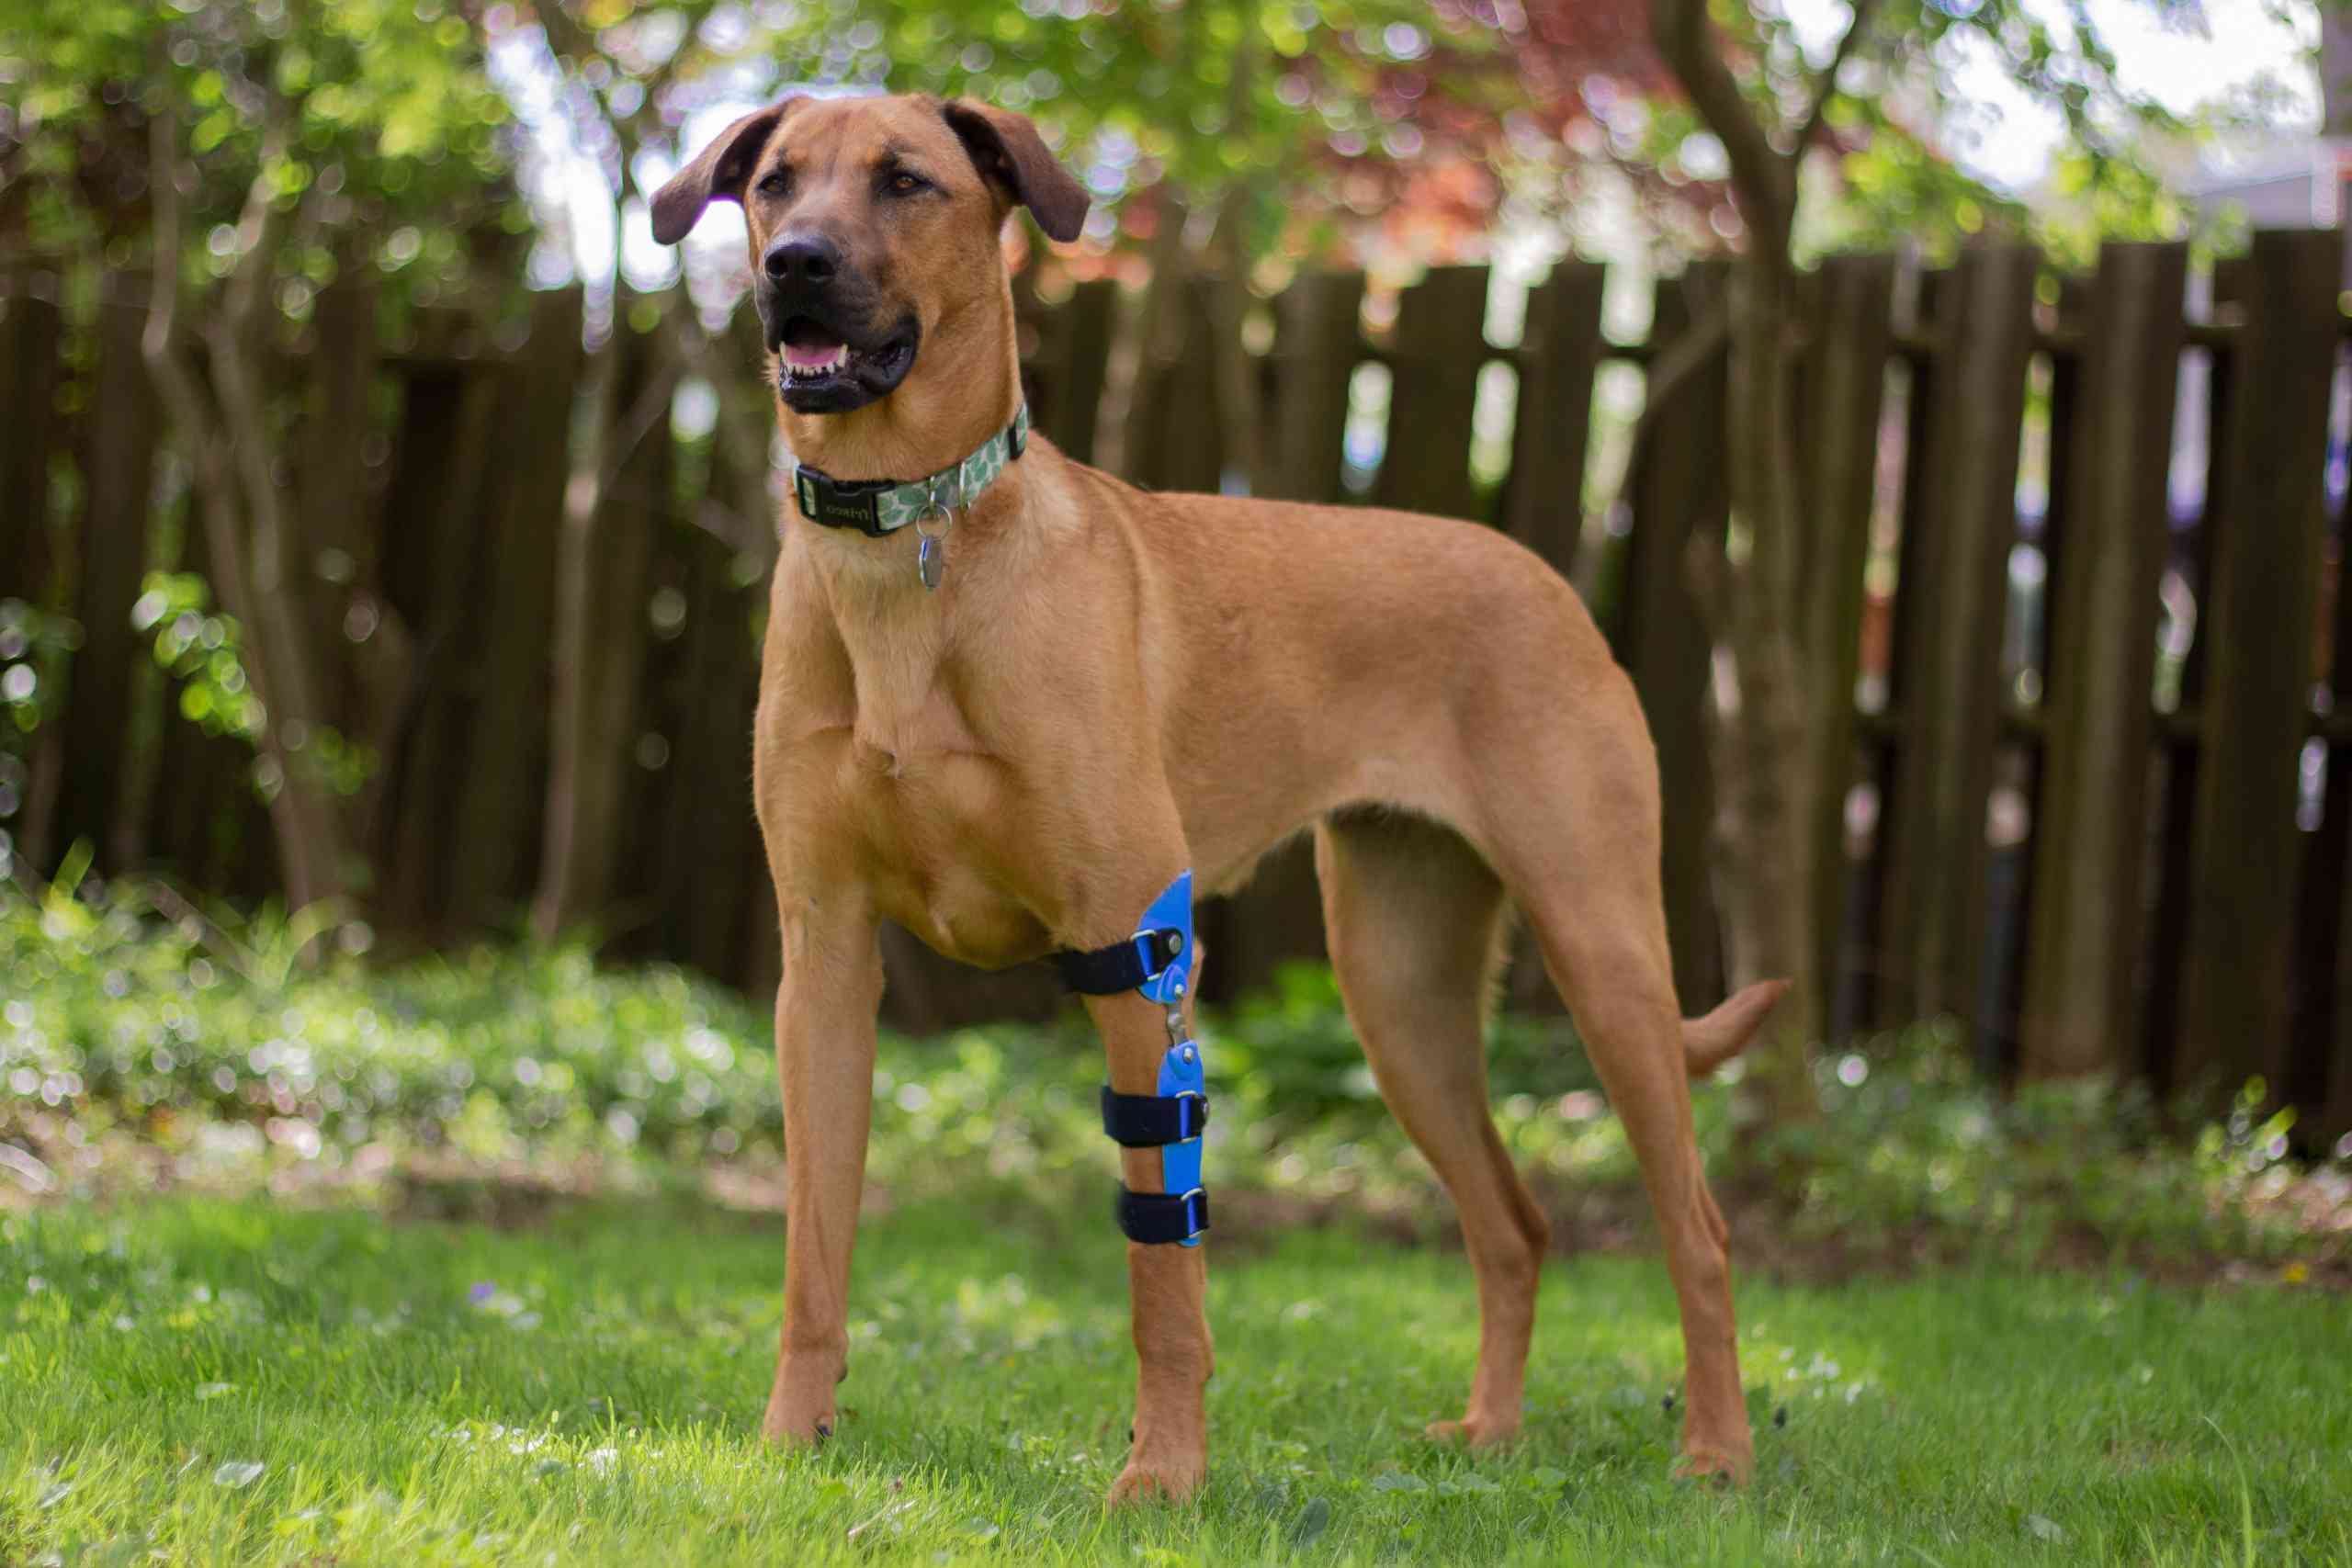 Brown dog wearing blue elbow brace